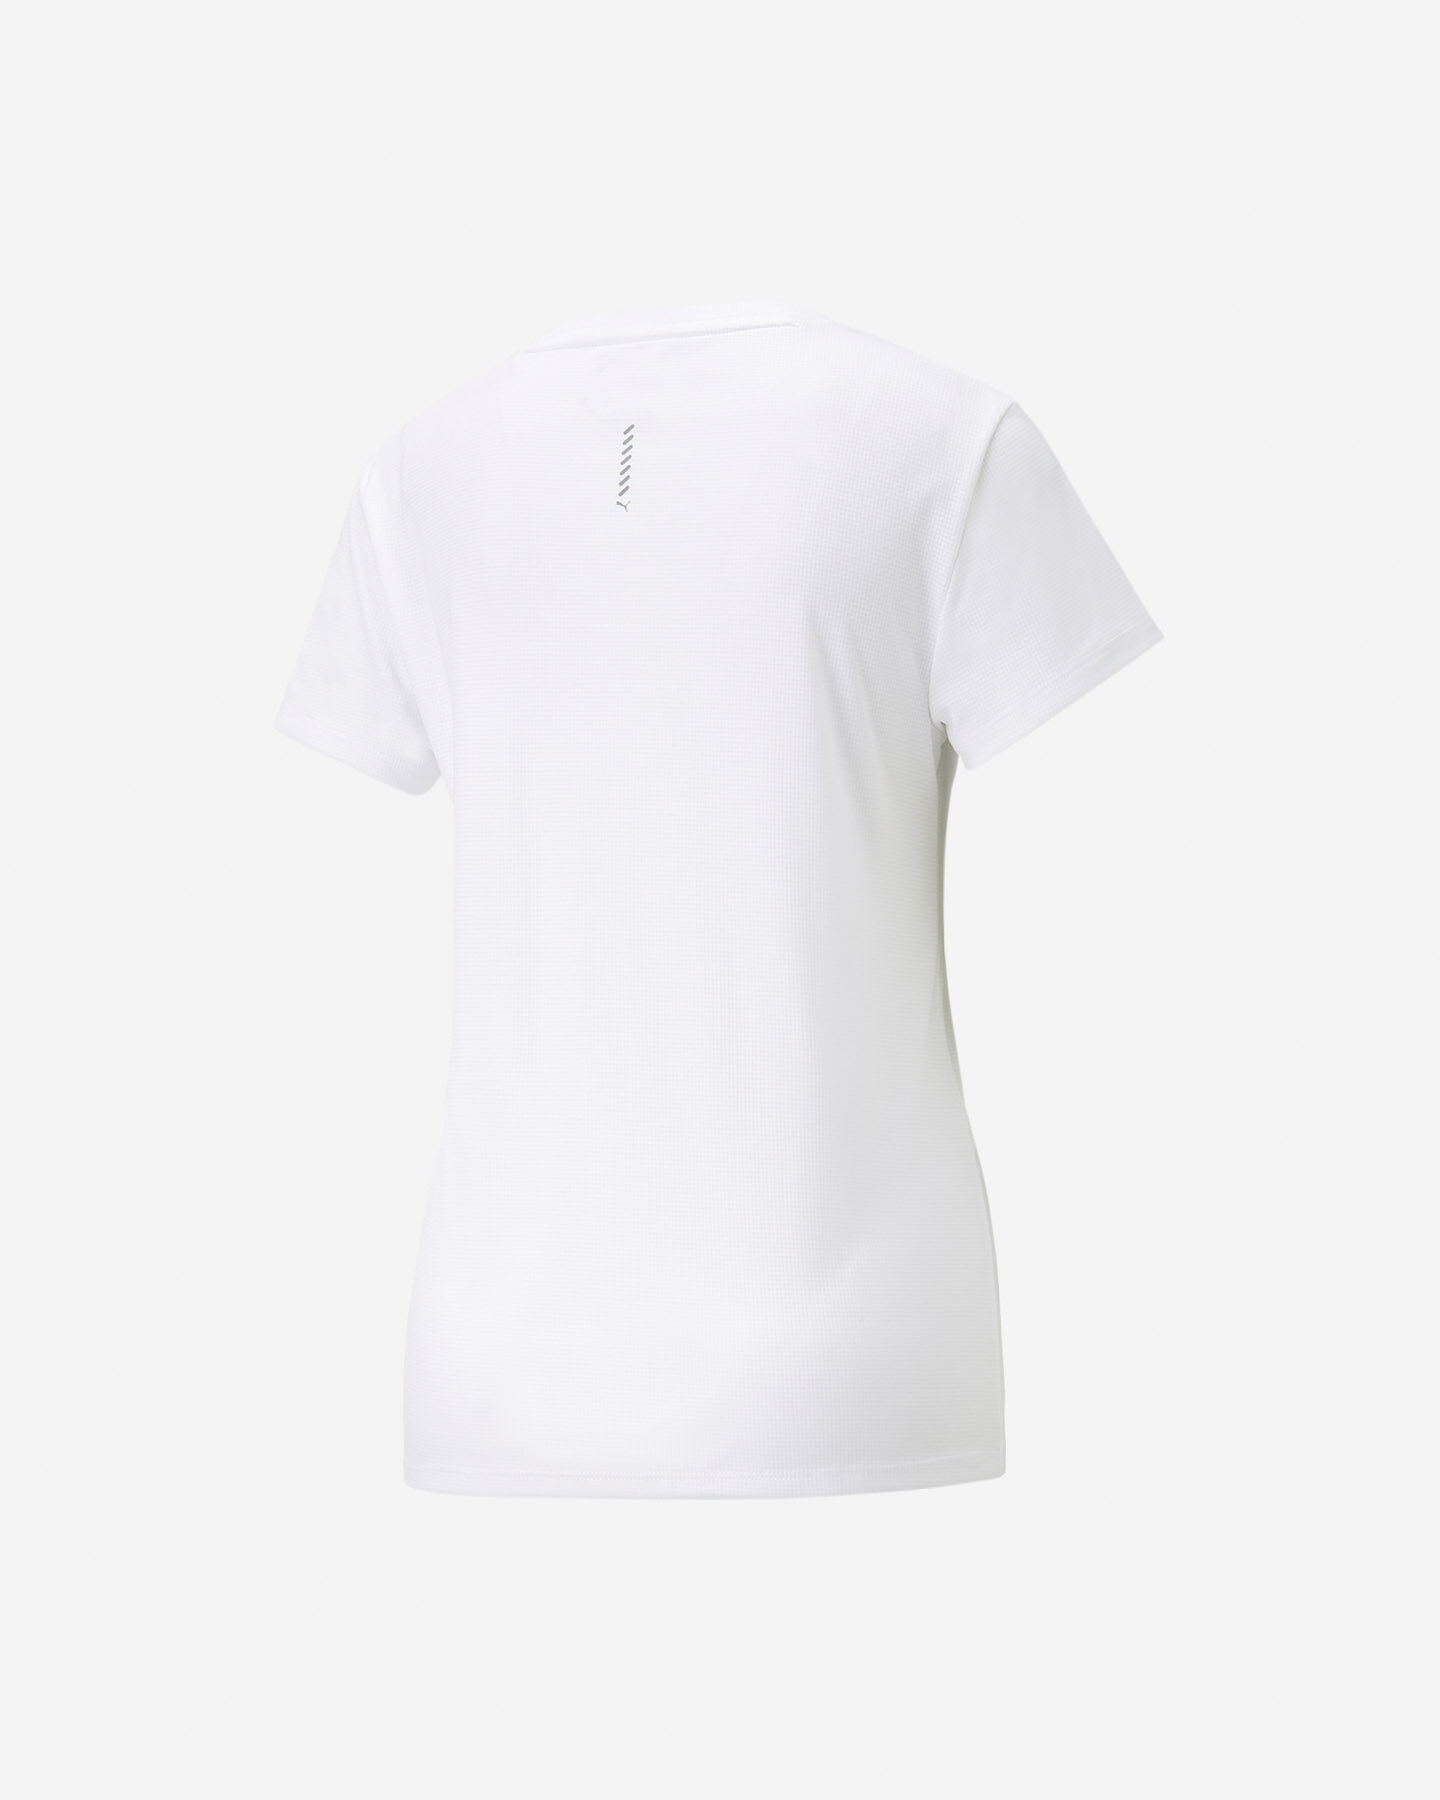  T-Shirt running PUMA FAVORITE LOGO W S5540642|52|XS scatto 1